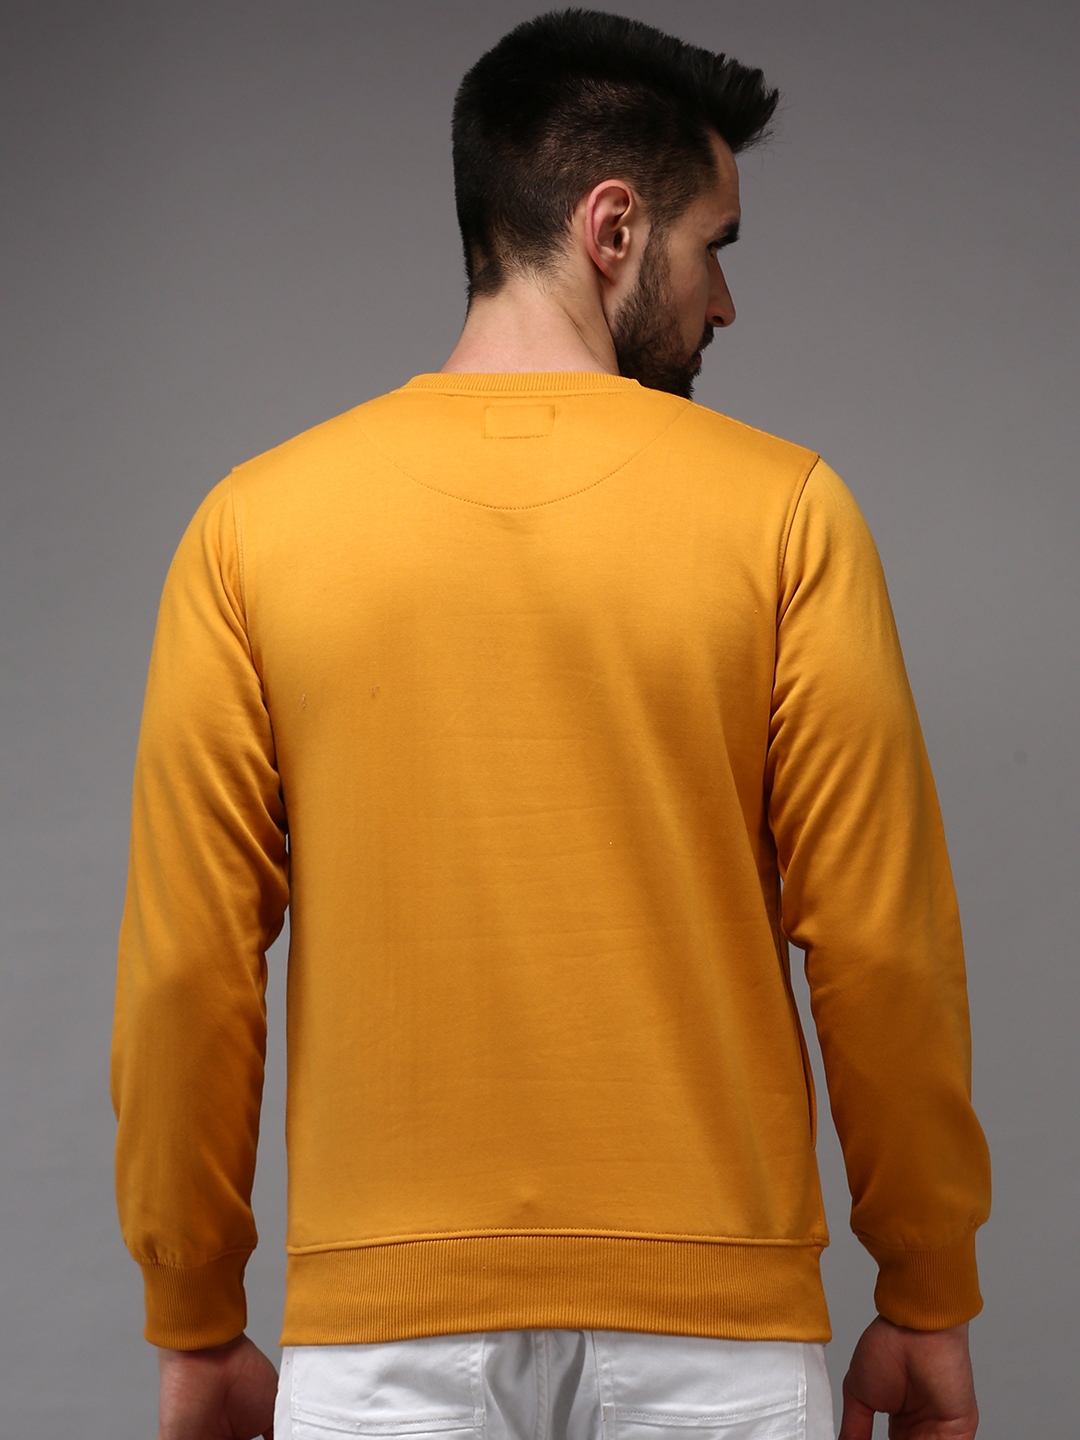 Men's Yellow Cotton Printed Sweatshirts